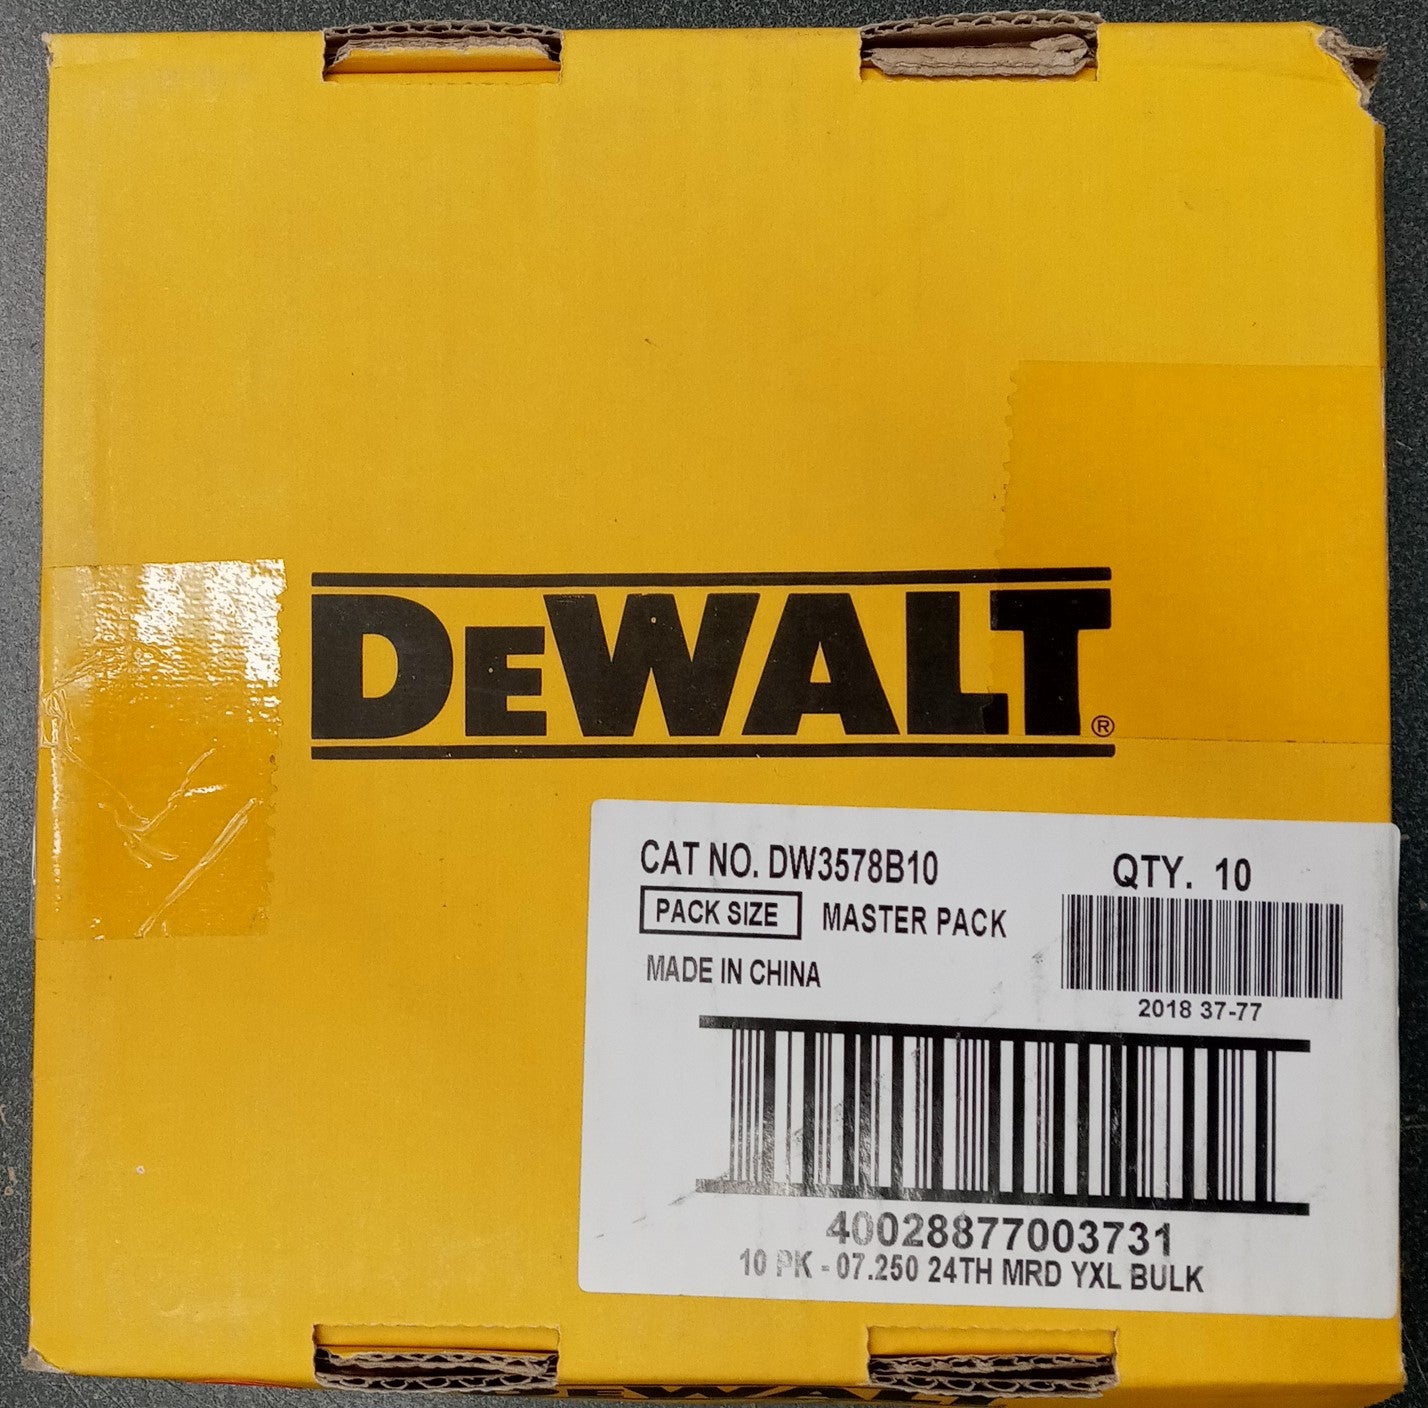 DeWalt DW3578B10 7-1/4" 24T Framing Saw Carbide Circular Saw Blade 10pcs